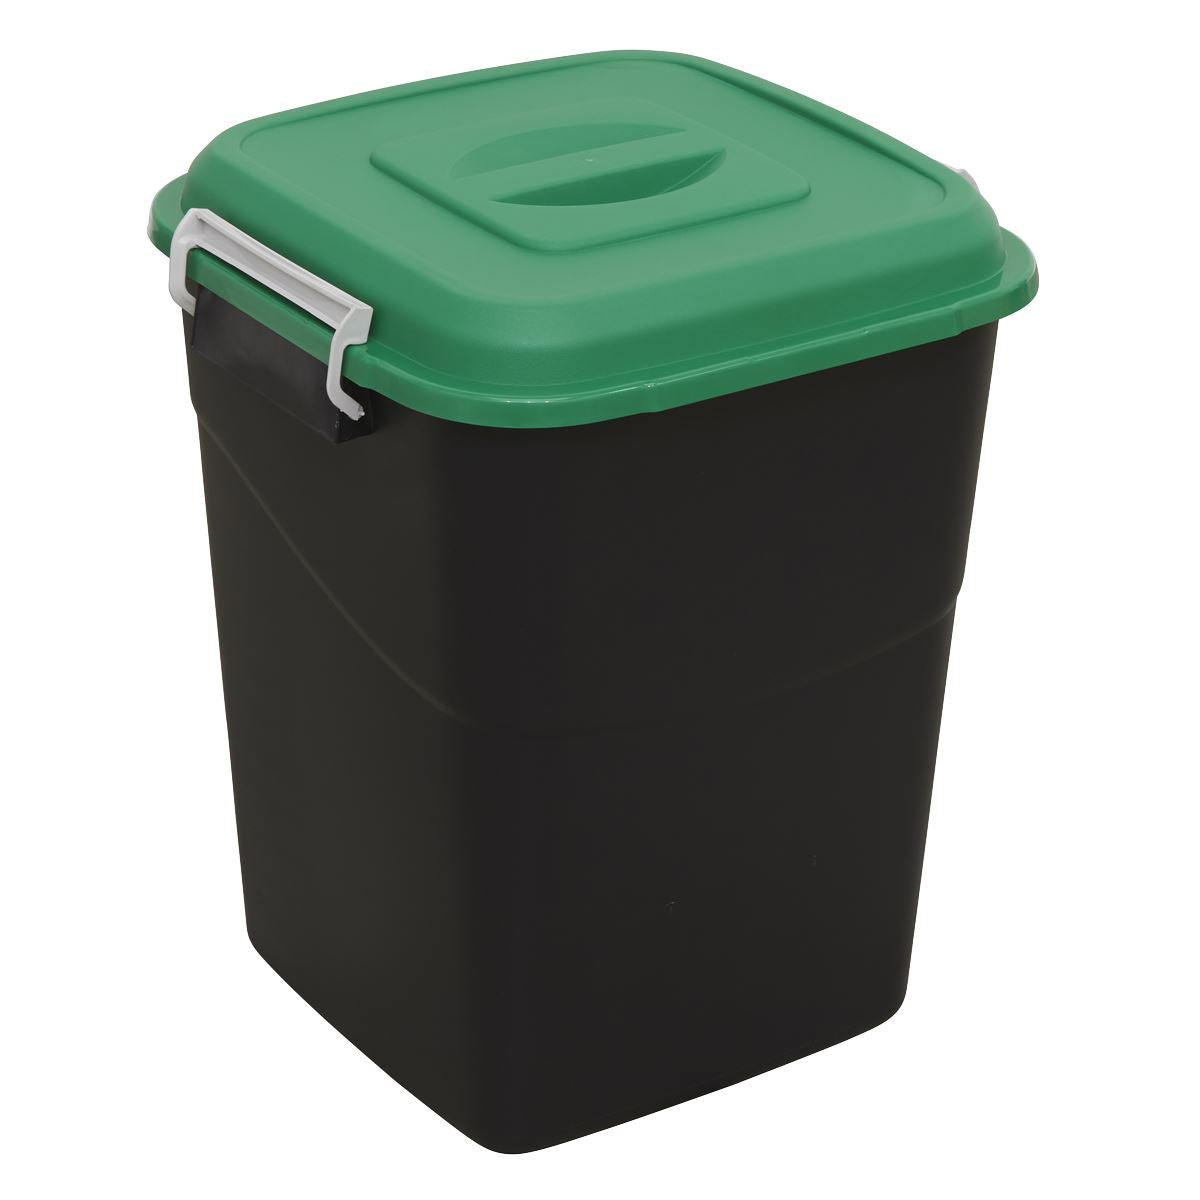 Sealey Refuse/Storage Bin 50L - Green